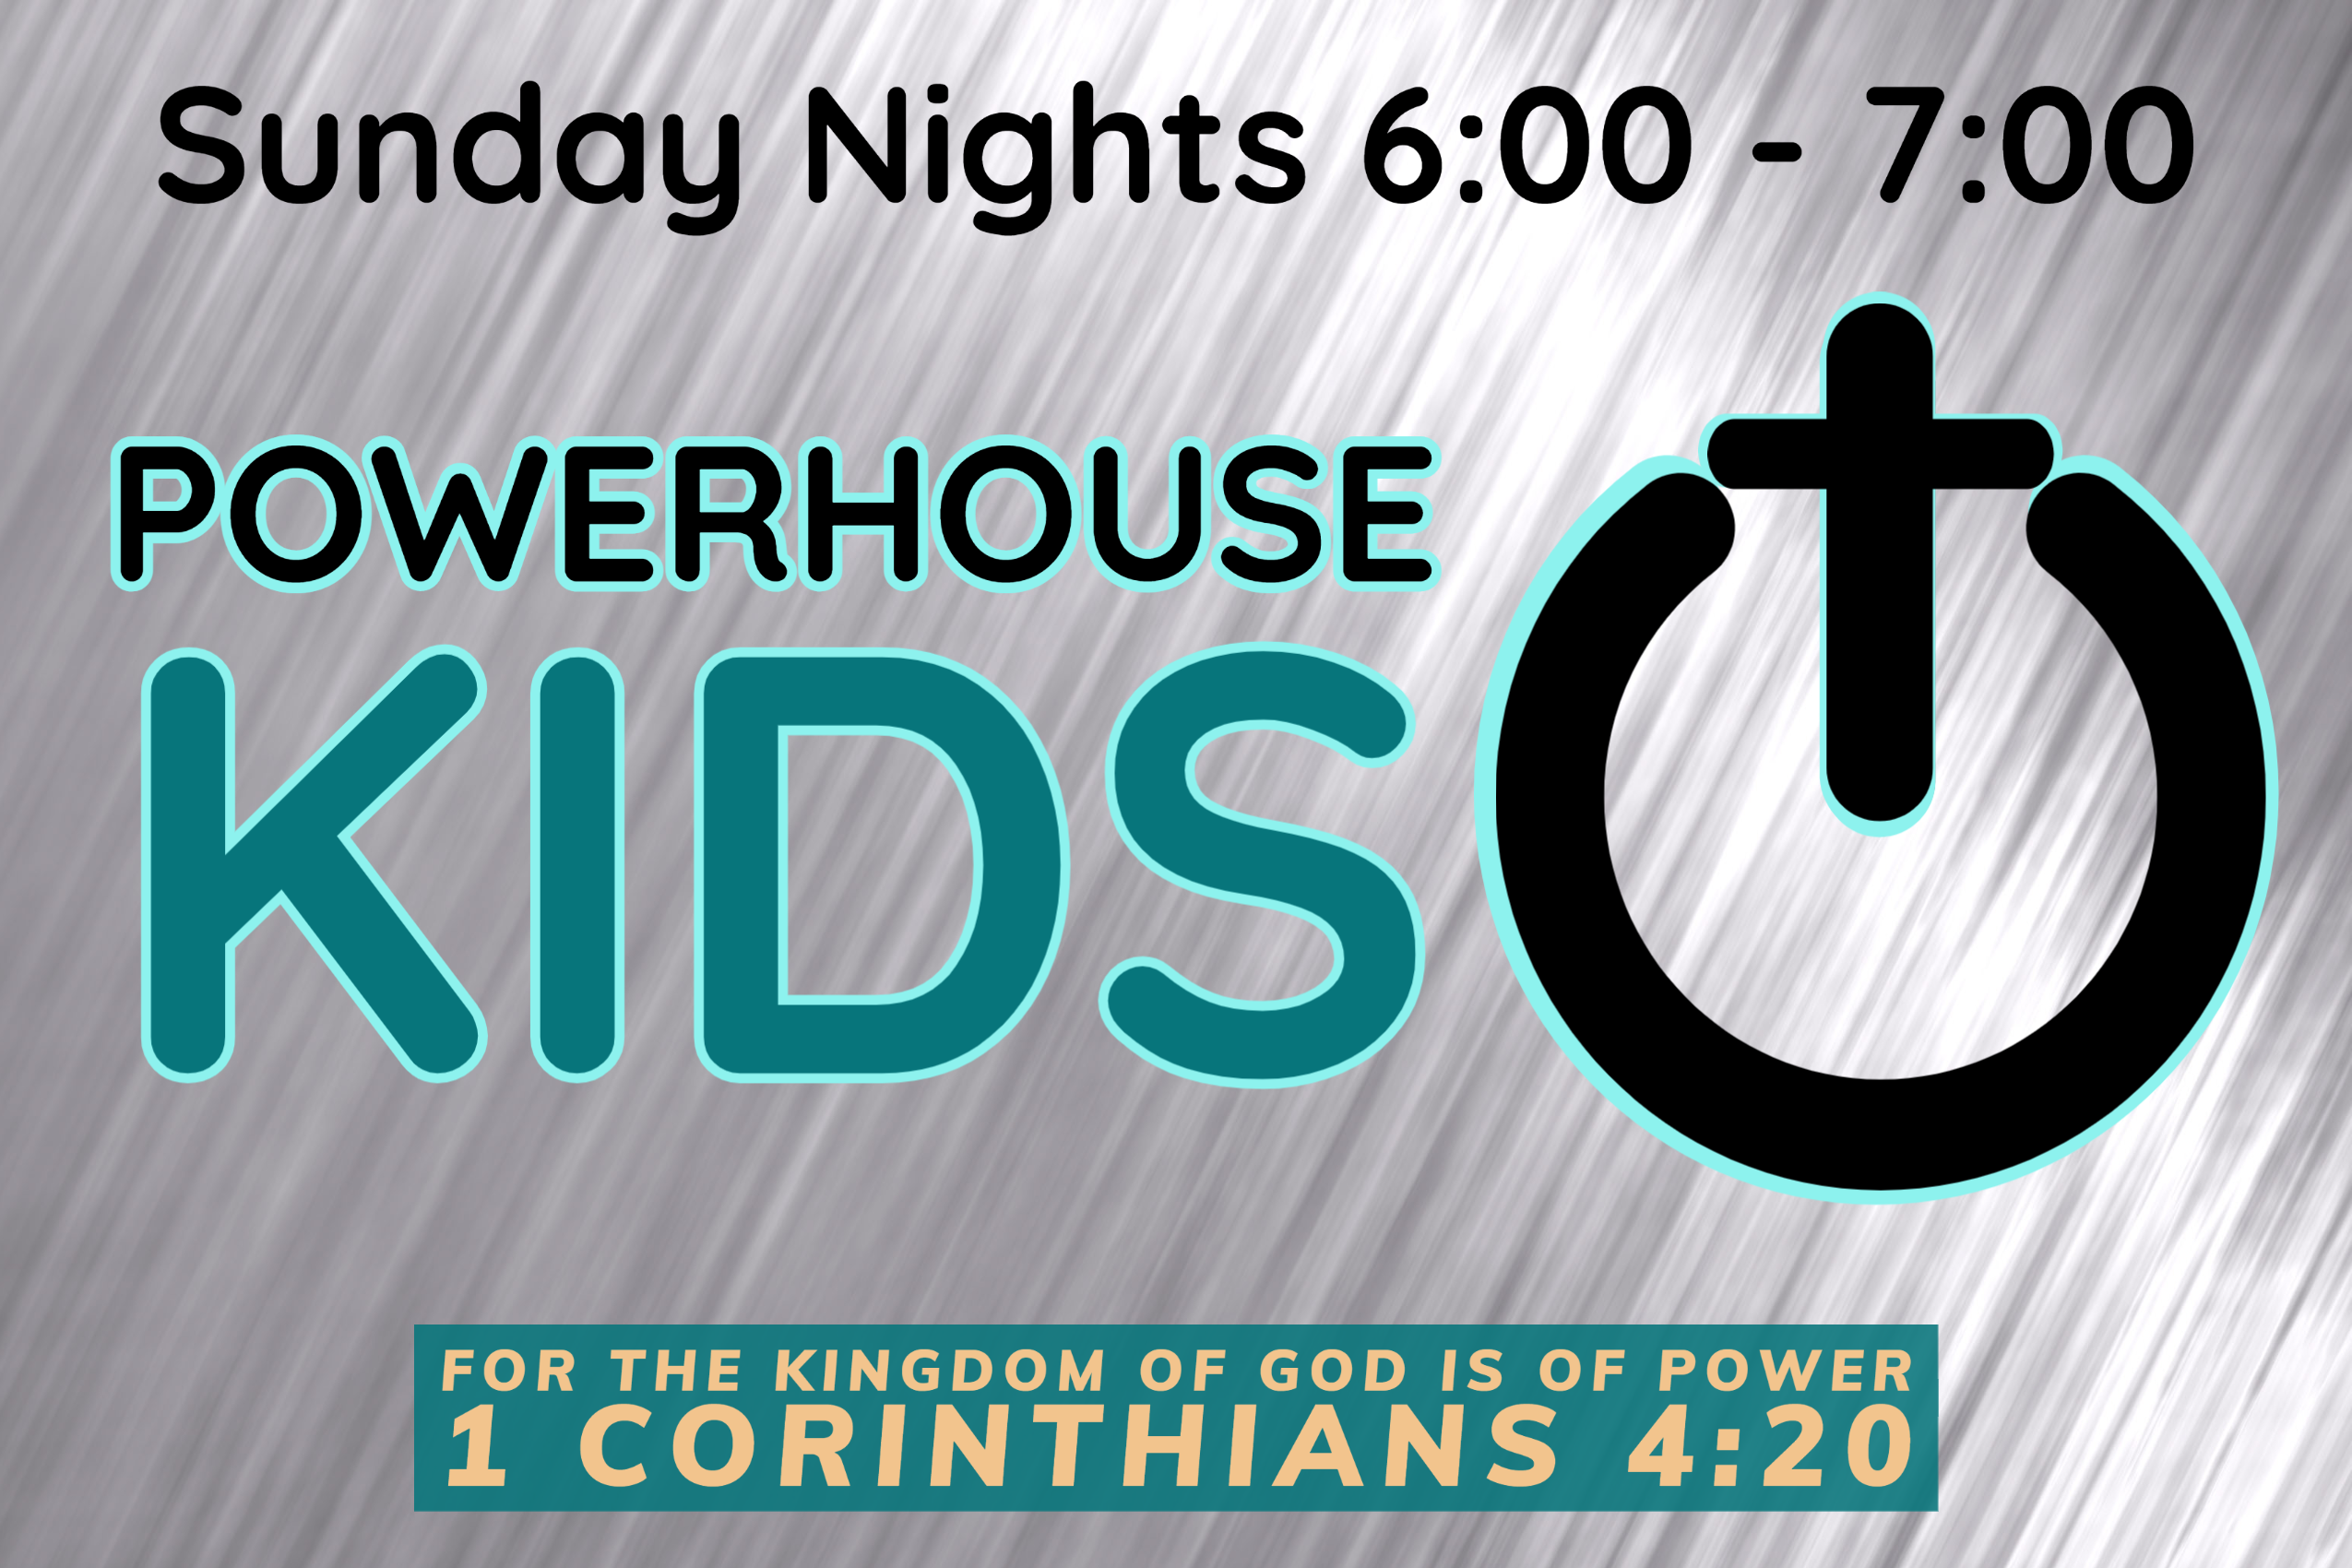 PowerHouse Kids: For the Kingdom of God is Power!